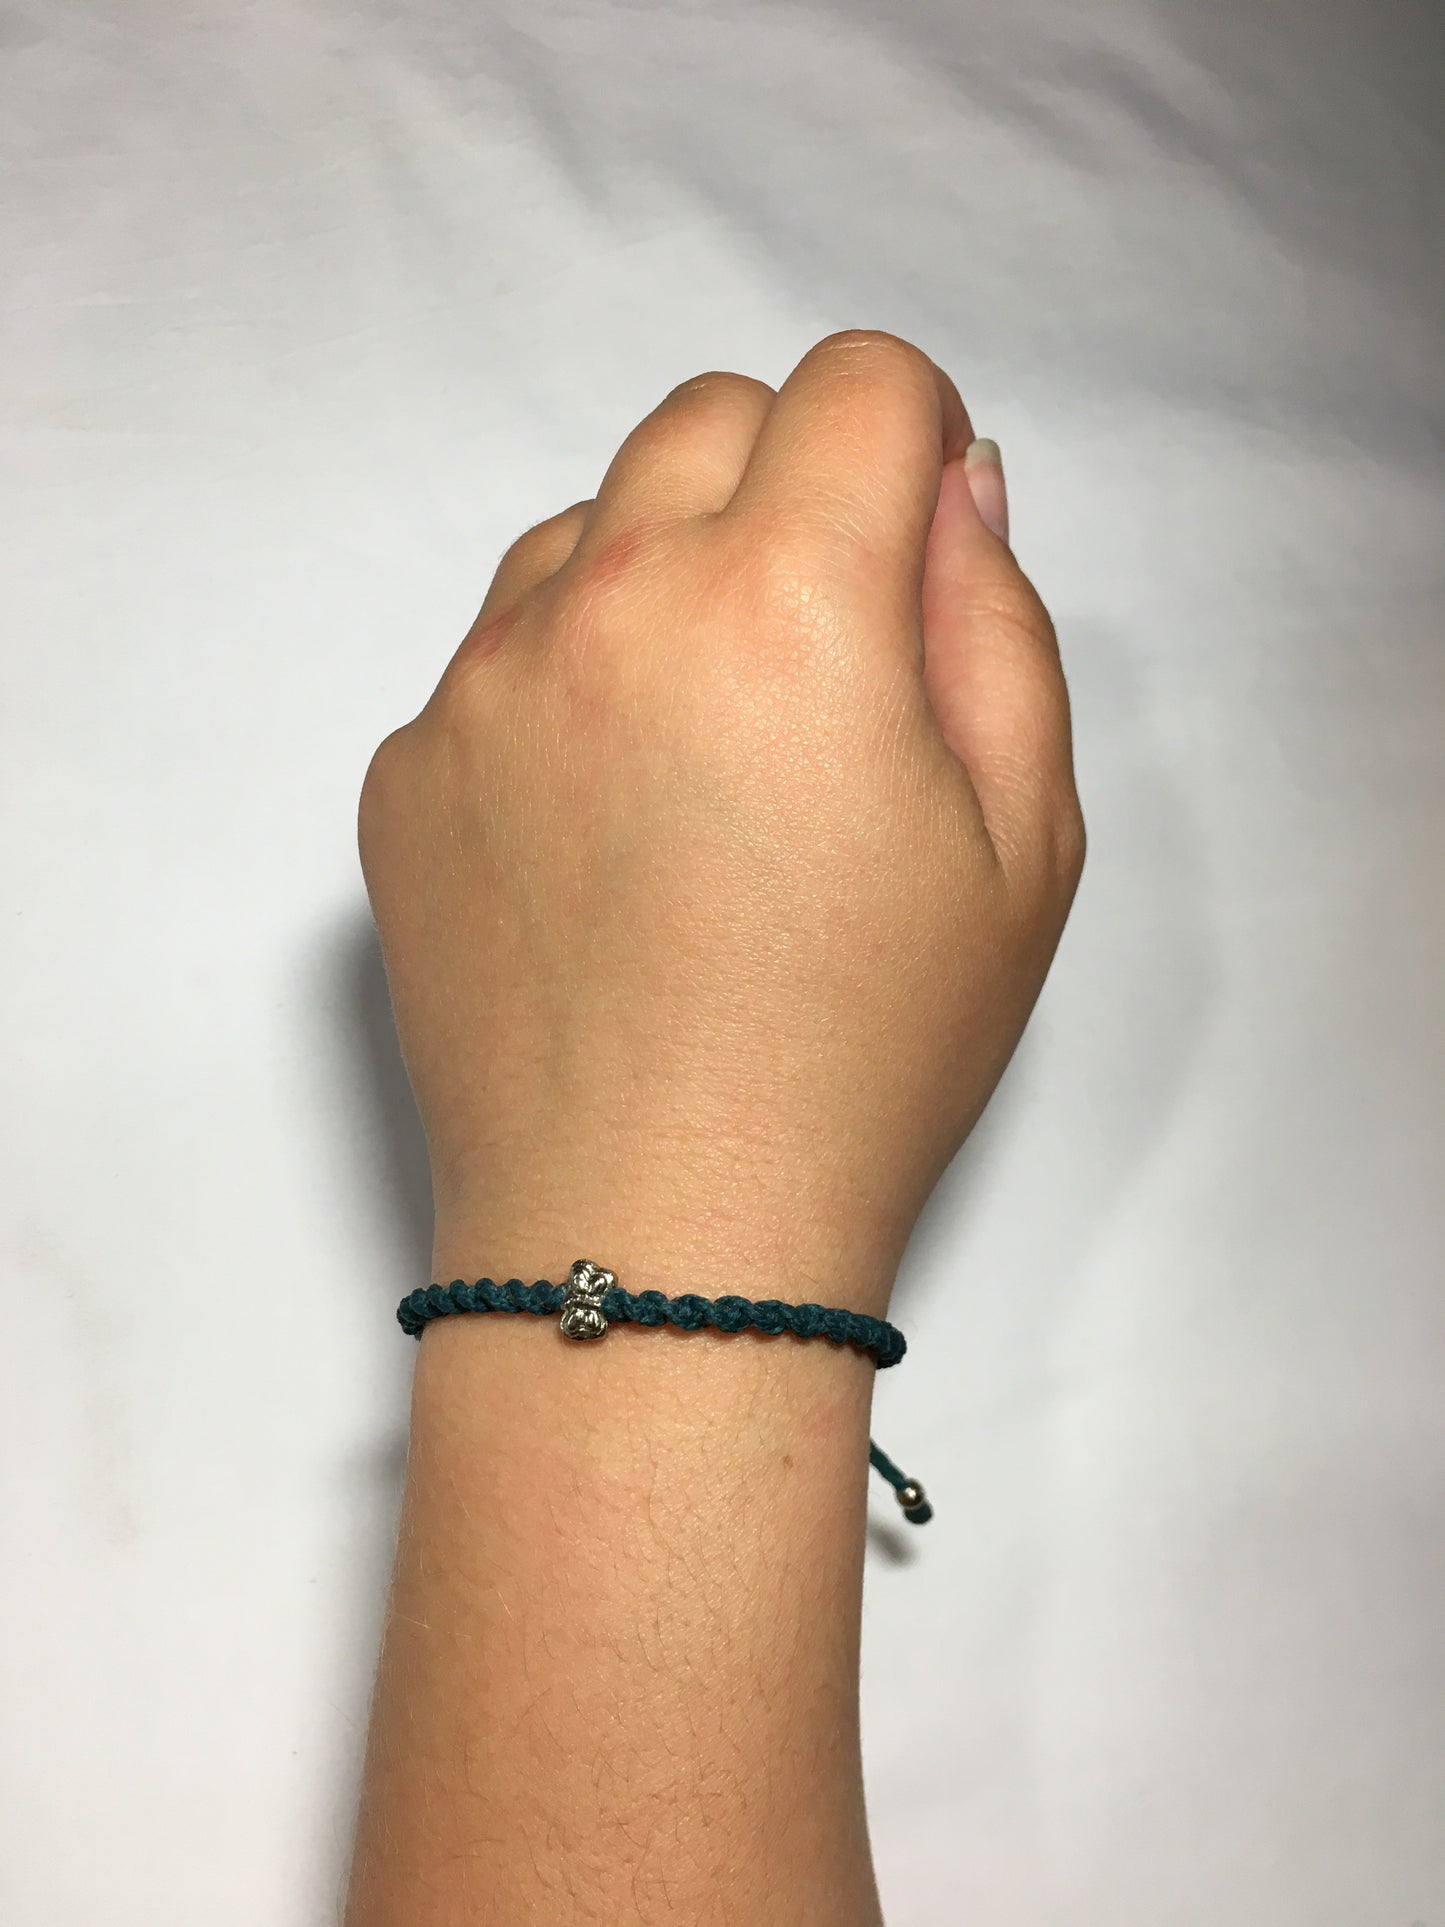 Roped Bracelet - Butterfly Pendant with wax cord bracelet